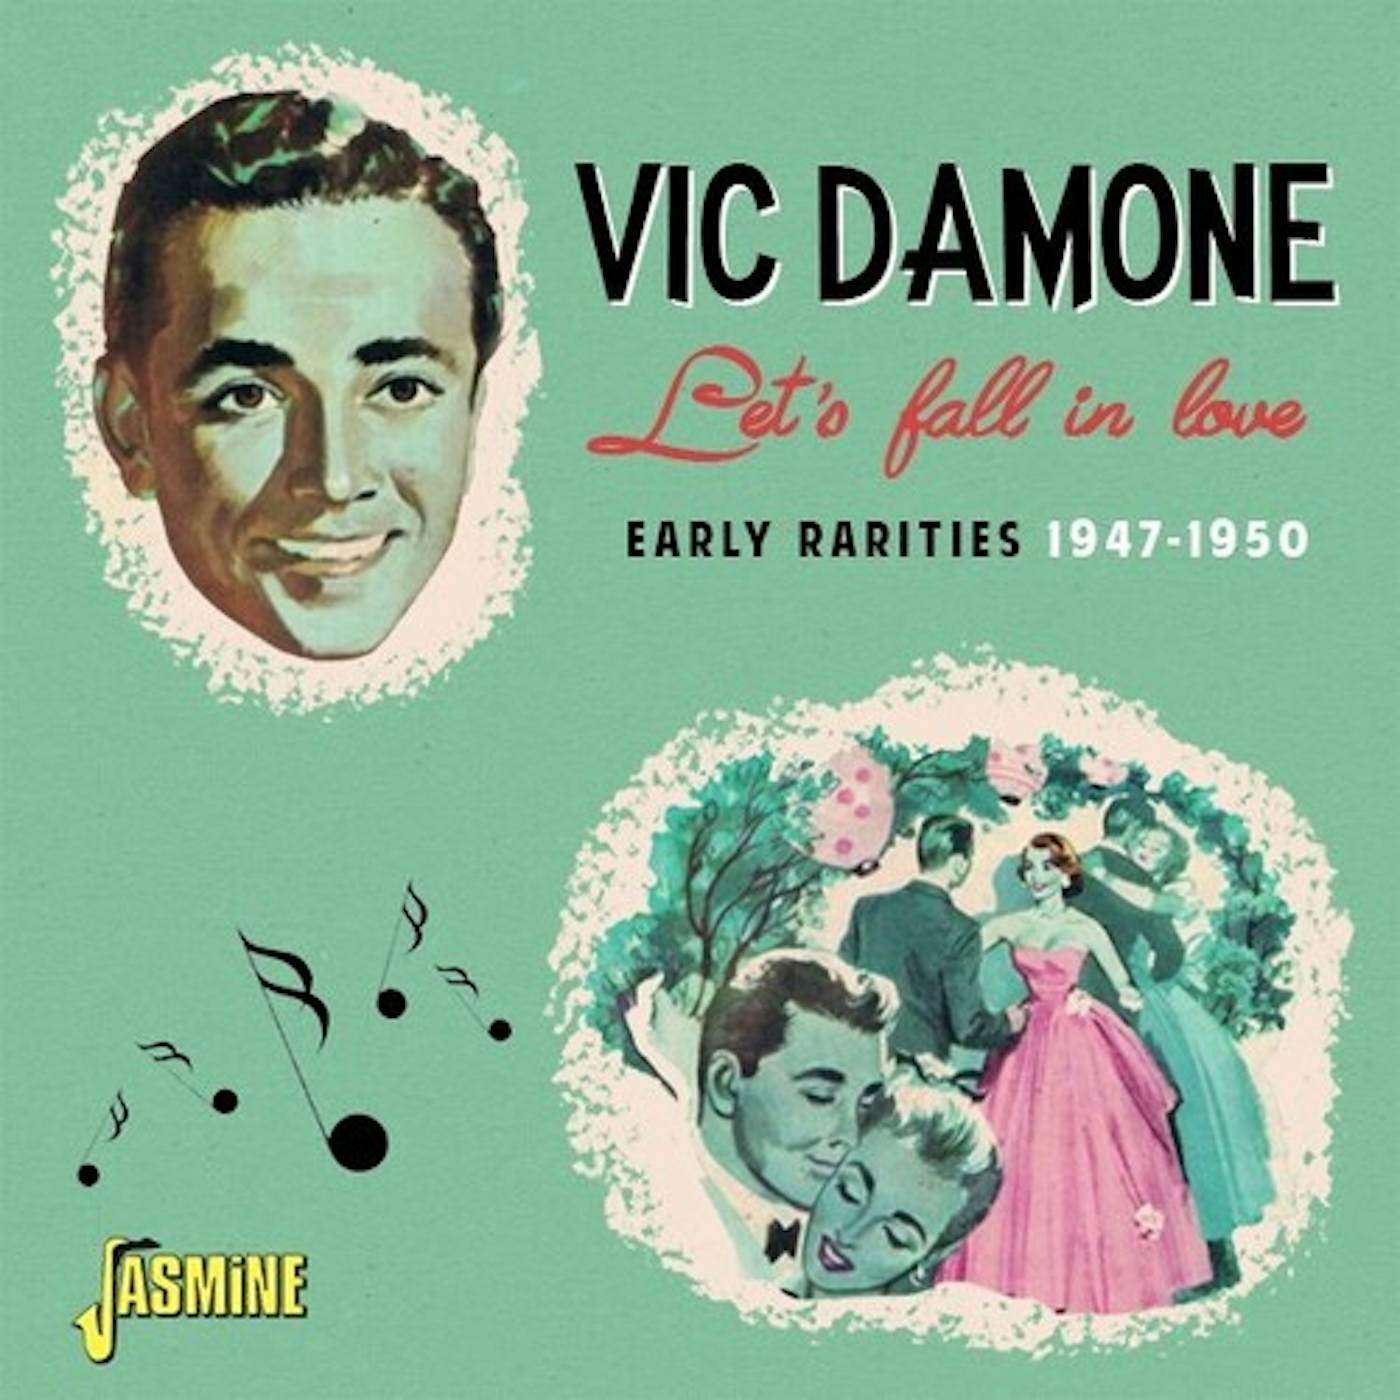 Vic Damone LET'S FALL IN LOVE: EARLY RARITIES 1947-1950 CD